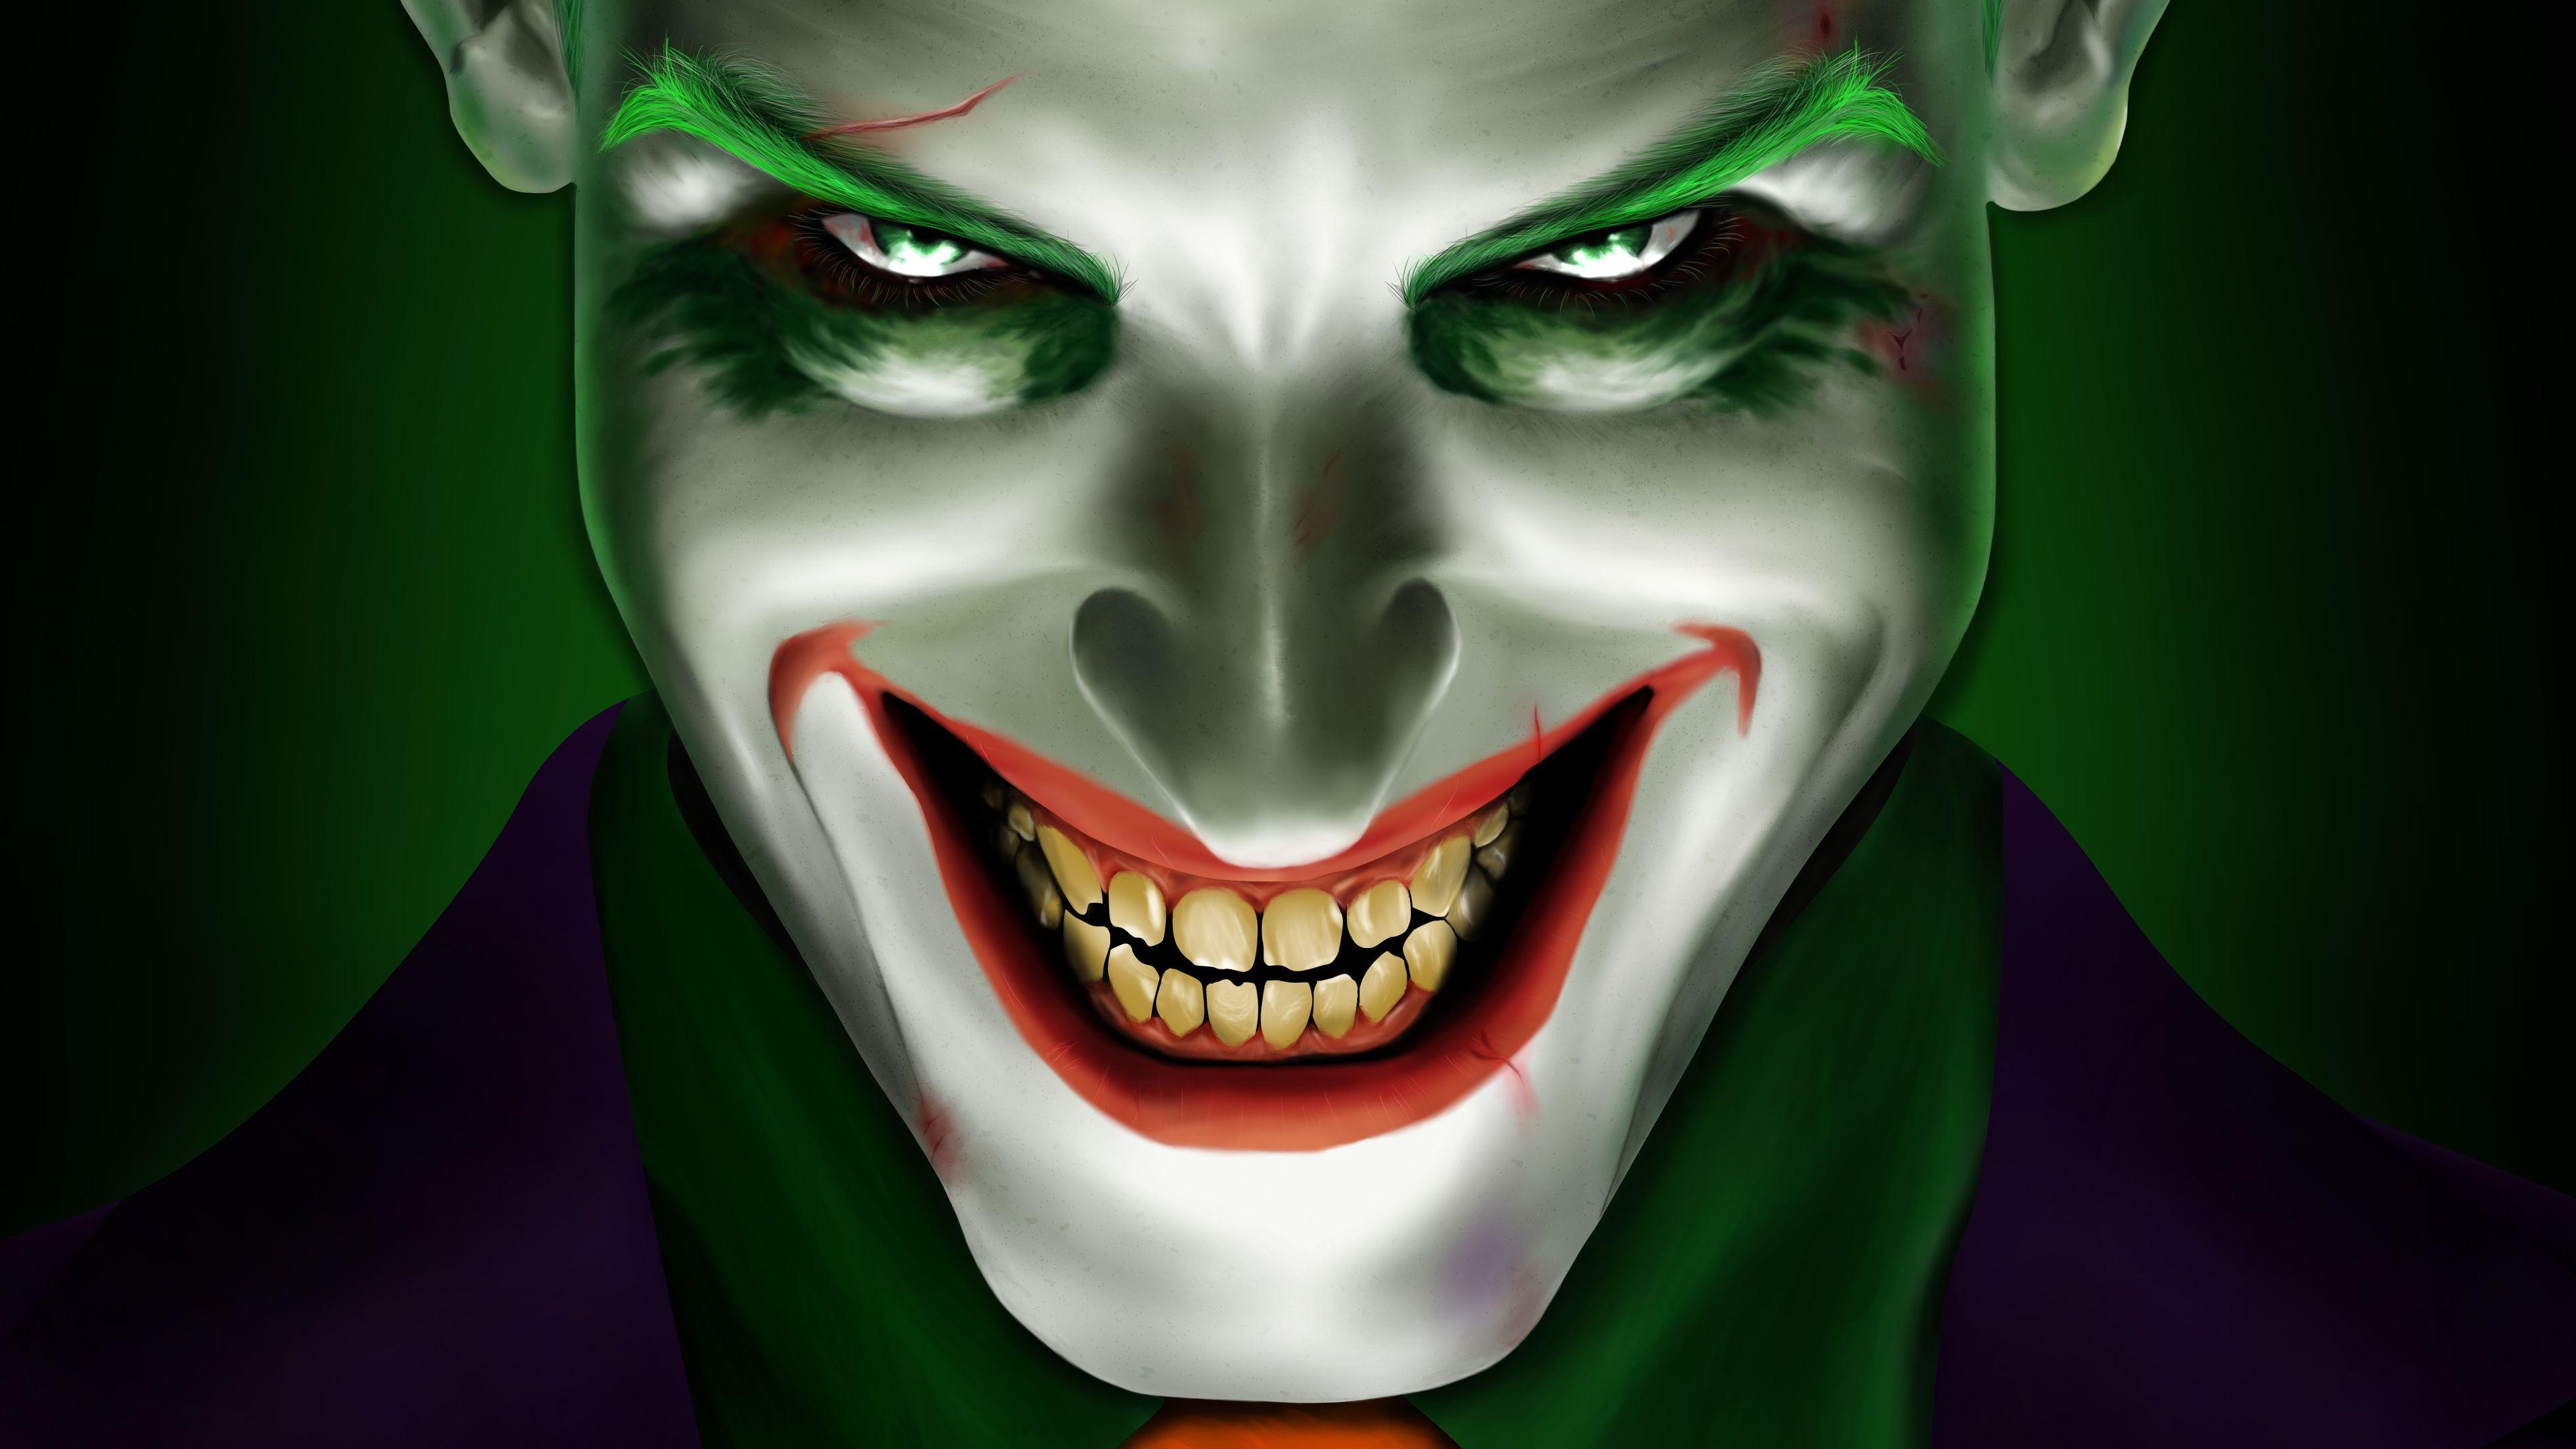 Free download Joker Smiling 5k supervillain wallpaper smiling